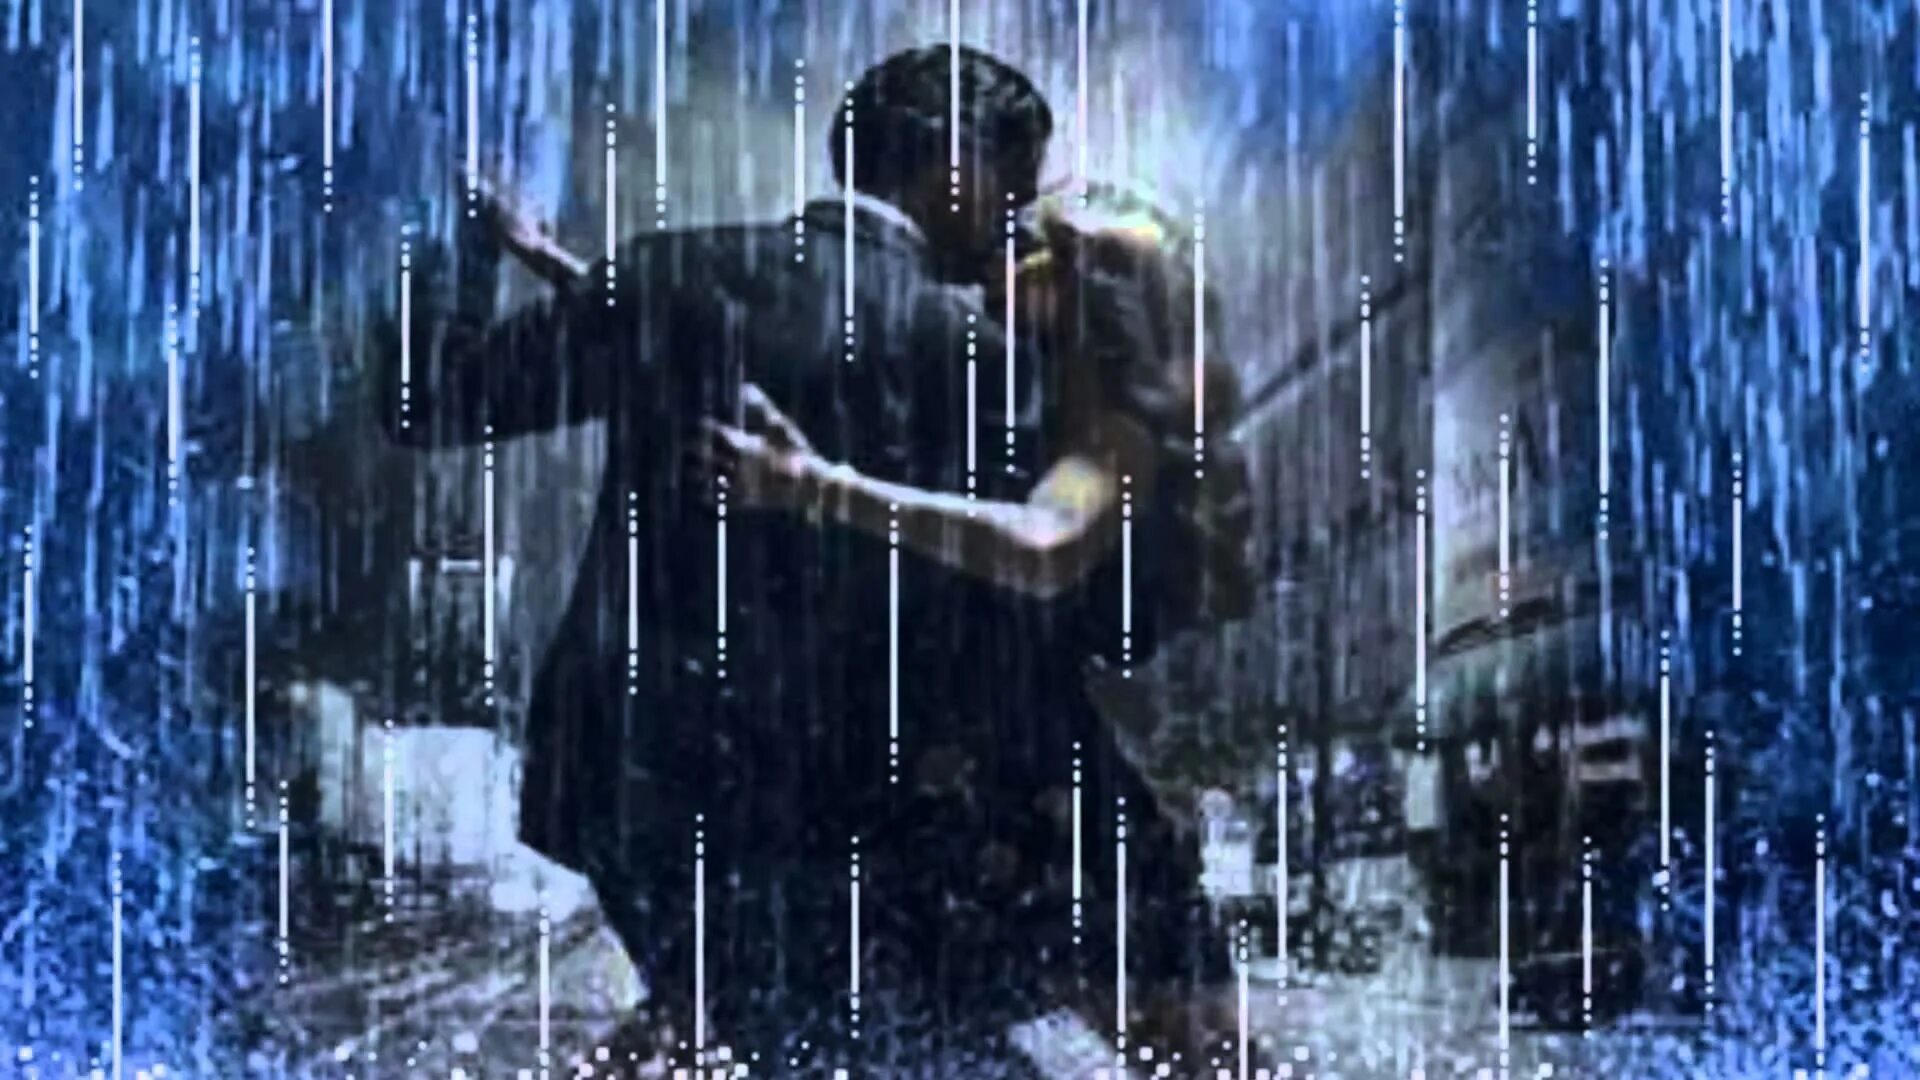 Шопен танец дождя. Двое танцуют под дождем. Вальс под дождем. Музыка дождя автор музыки